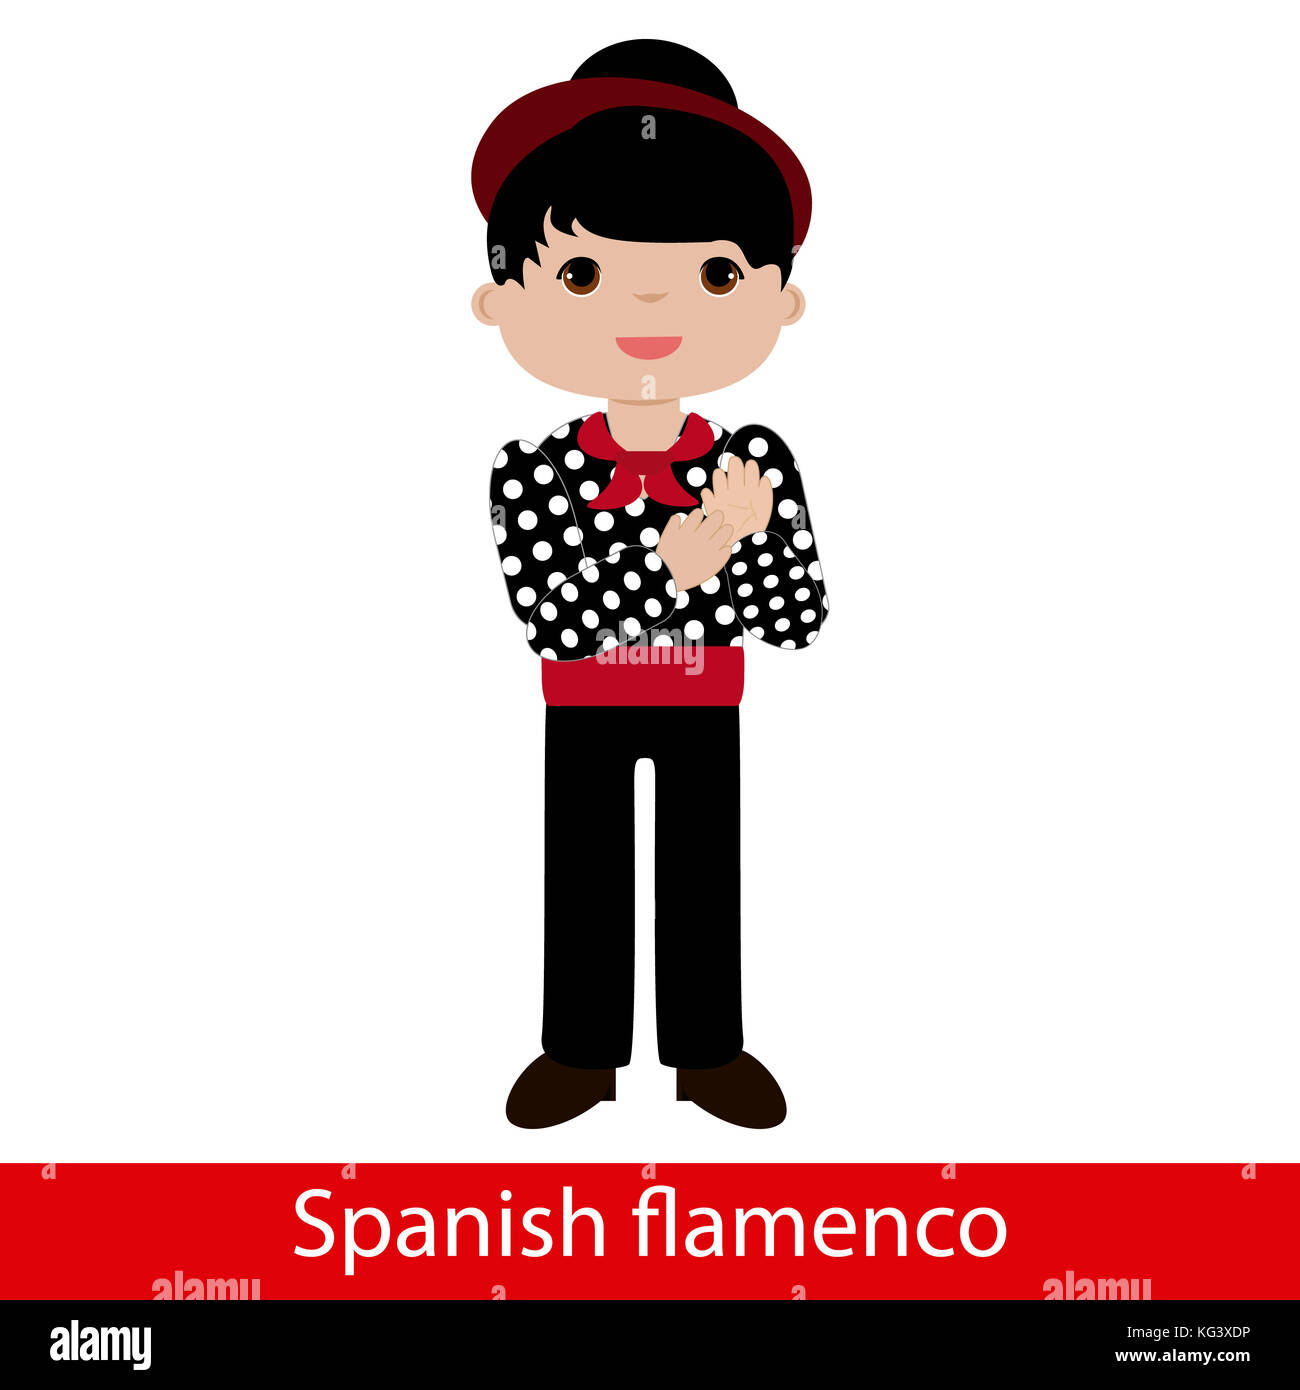 Flamenco boy with black shirt and white polka dots Stock Photo